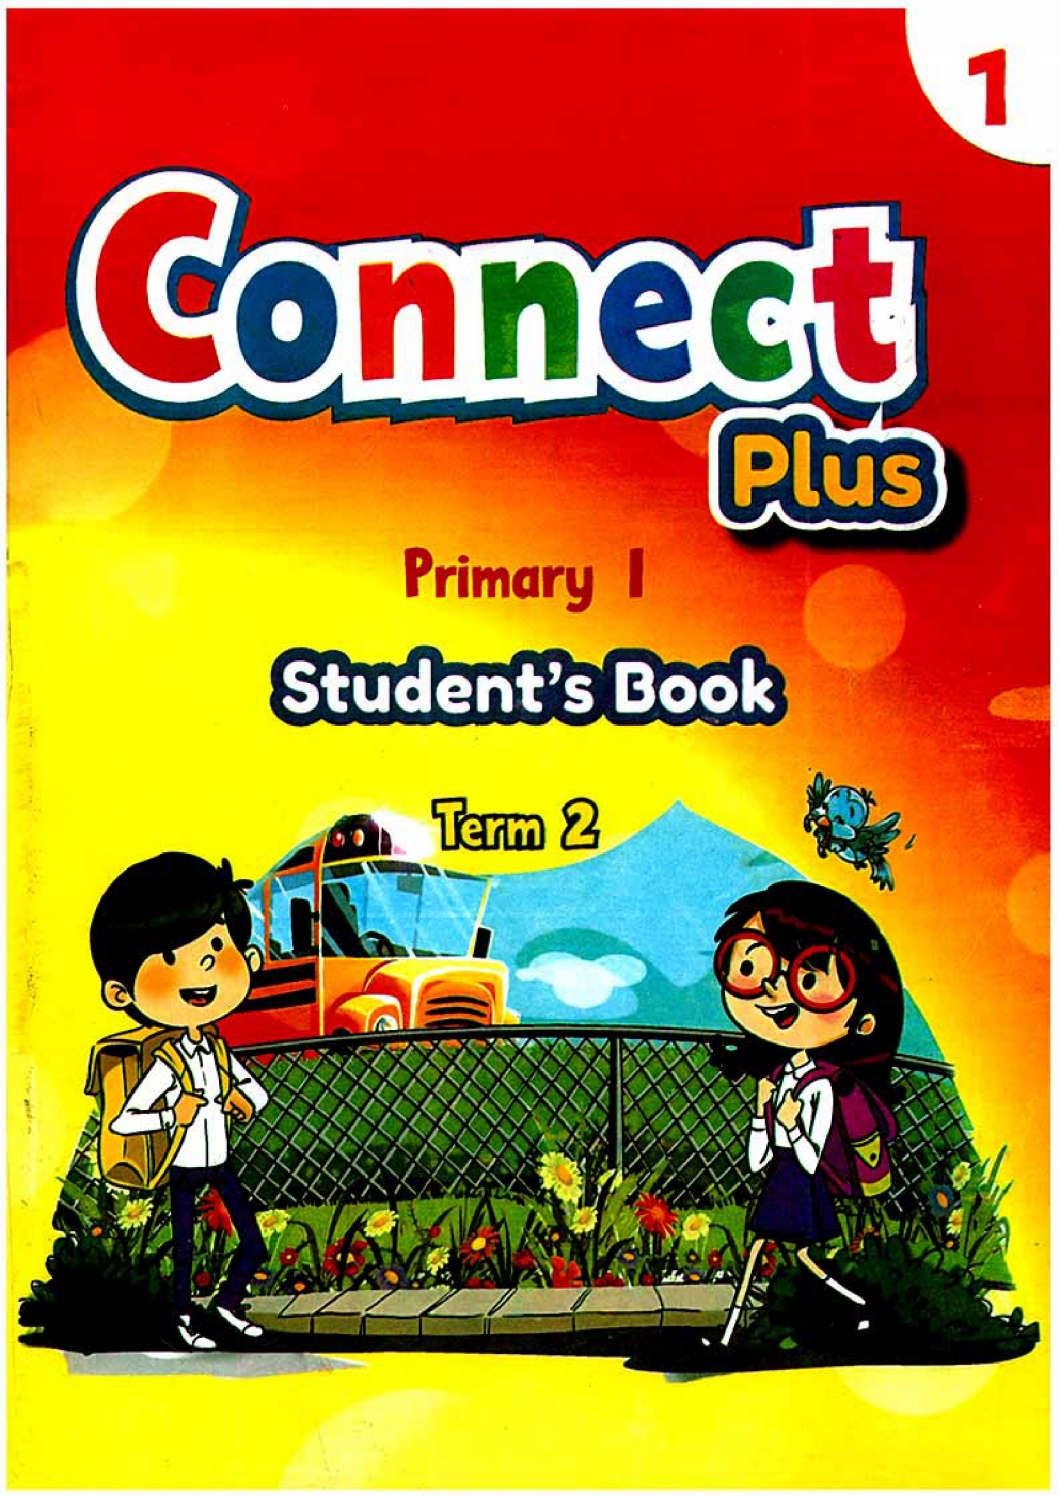 Connect Plus Prima 1 Term 2 Student's book